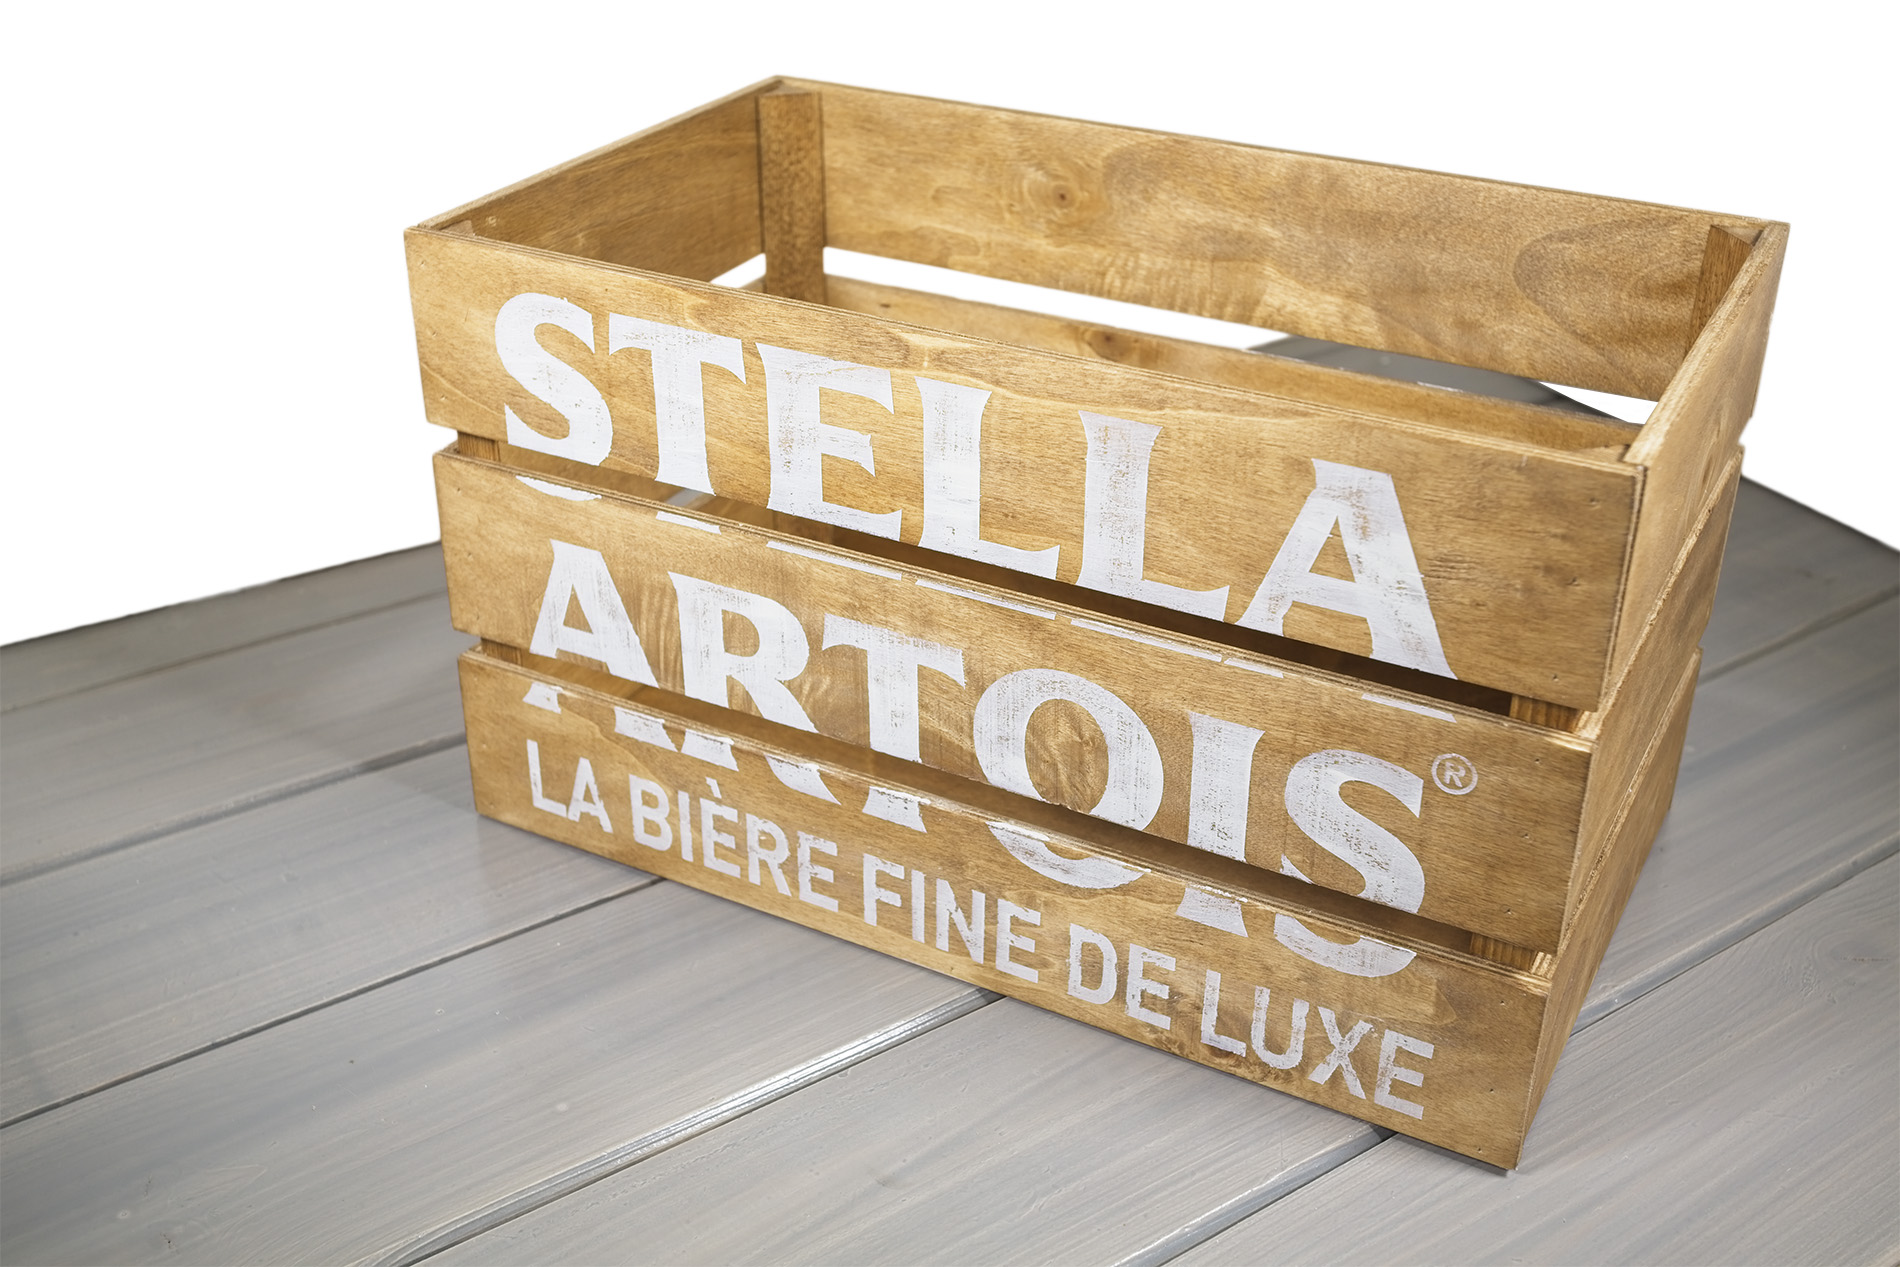 Pitrusino cassetta design wooden crate